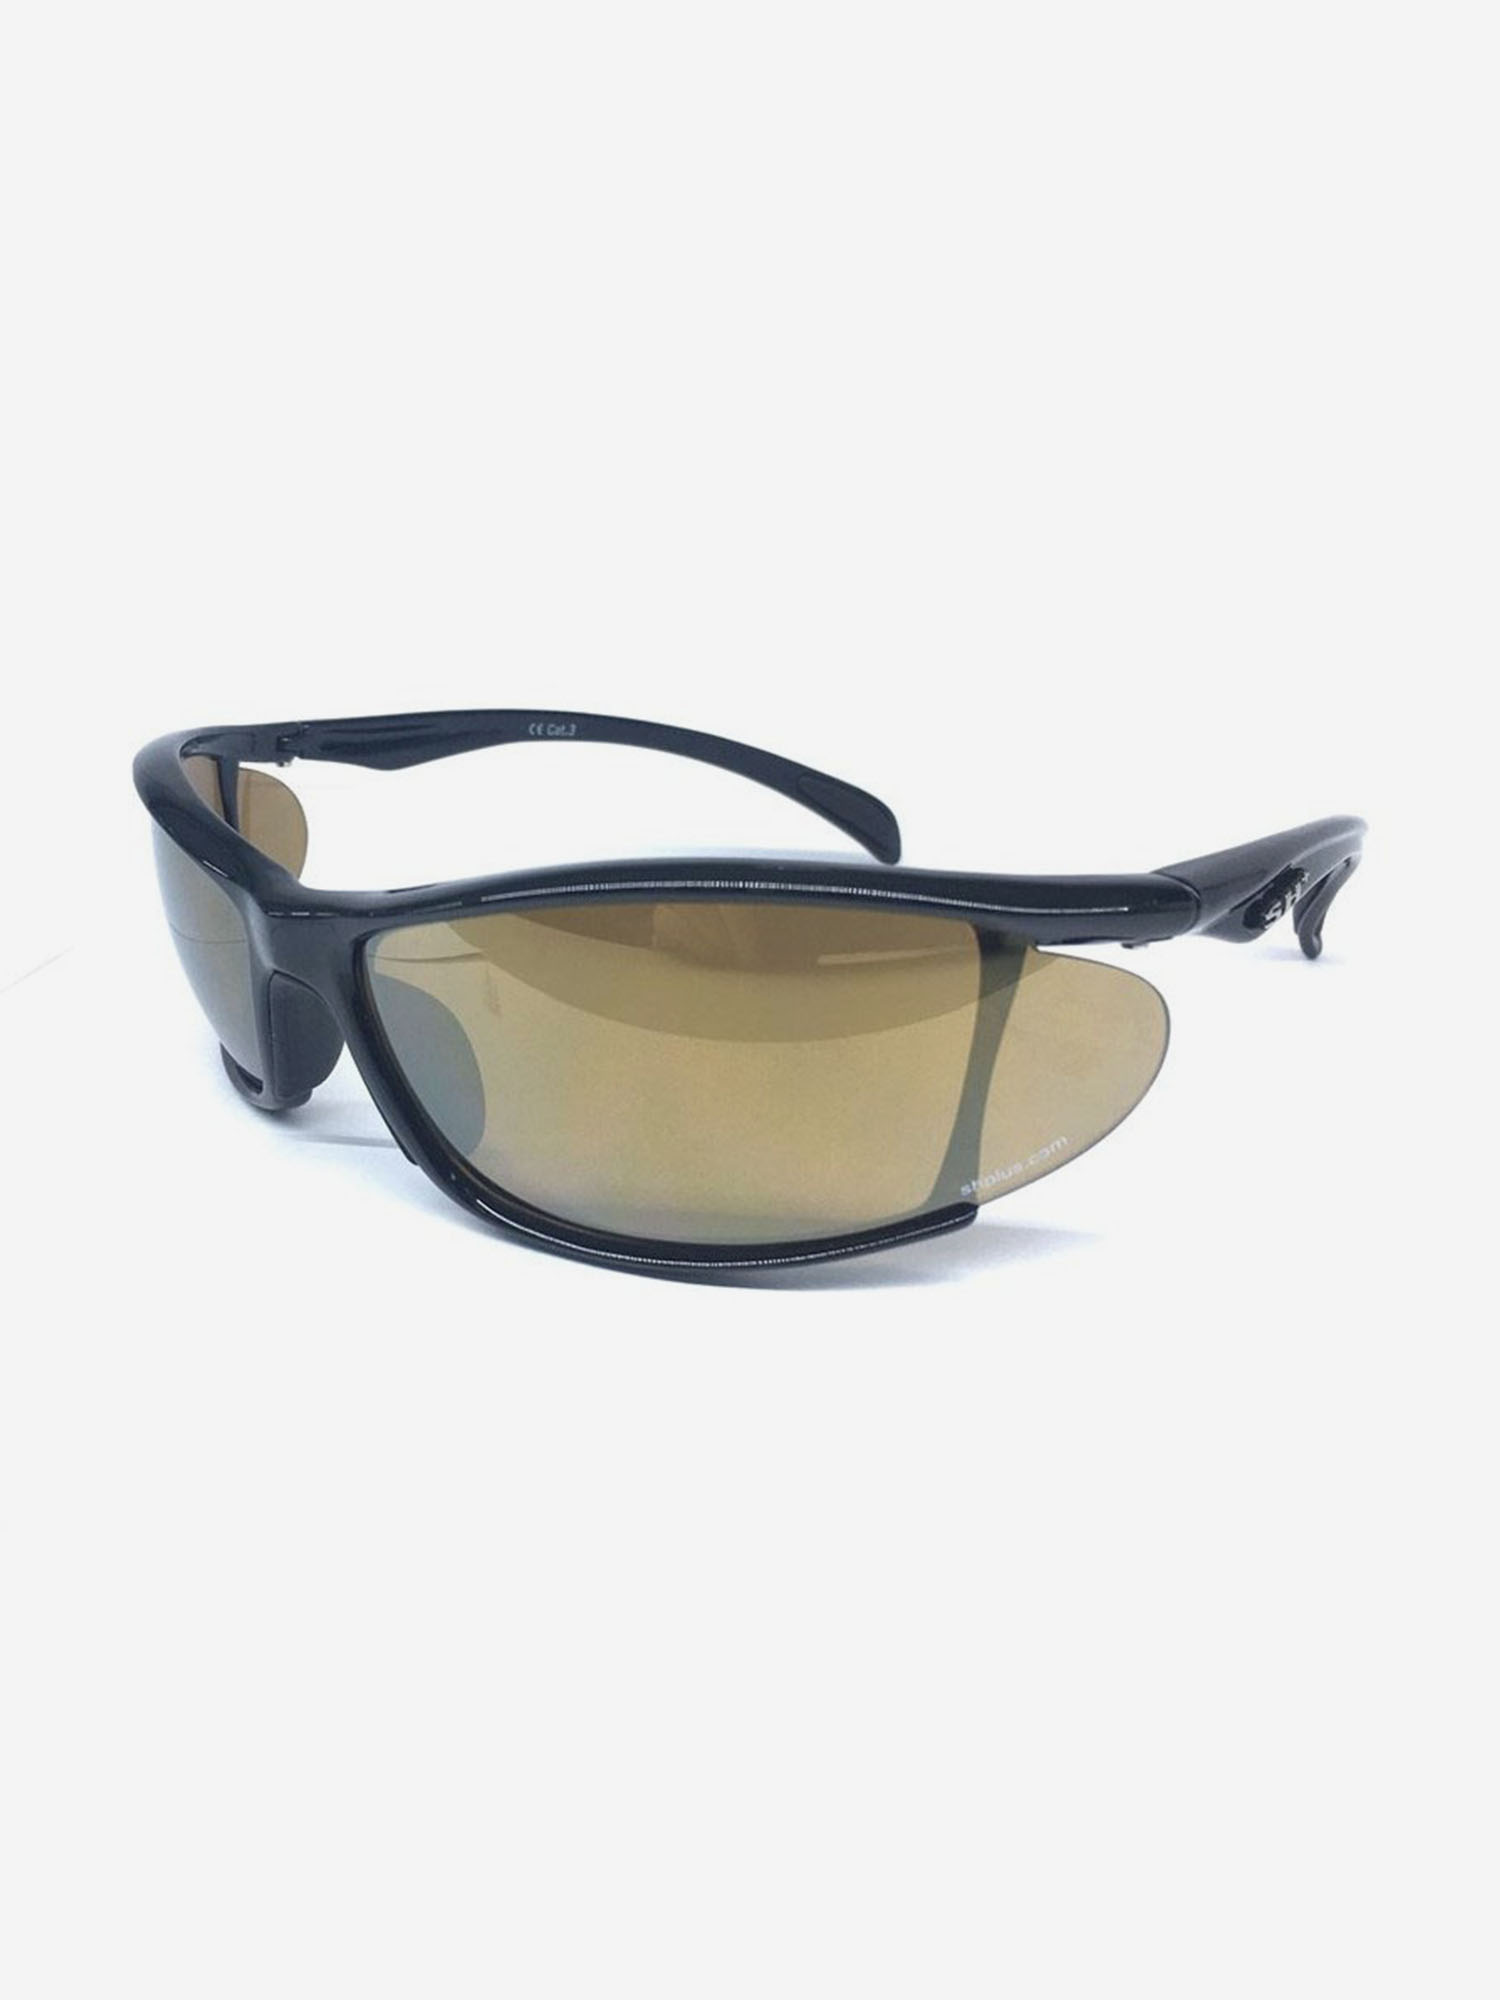 Спортивные очки SH+ RG 4110 black/brown (+доп. линза Clear+кофр), Черный